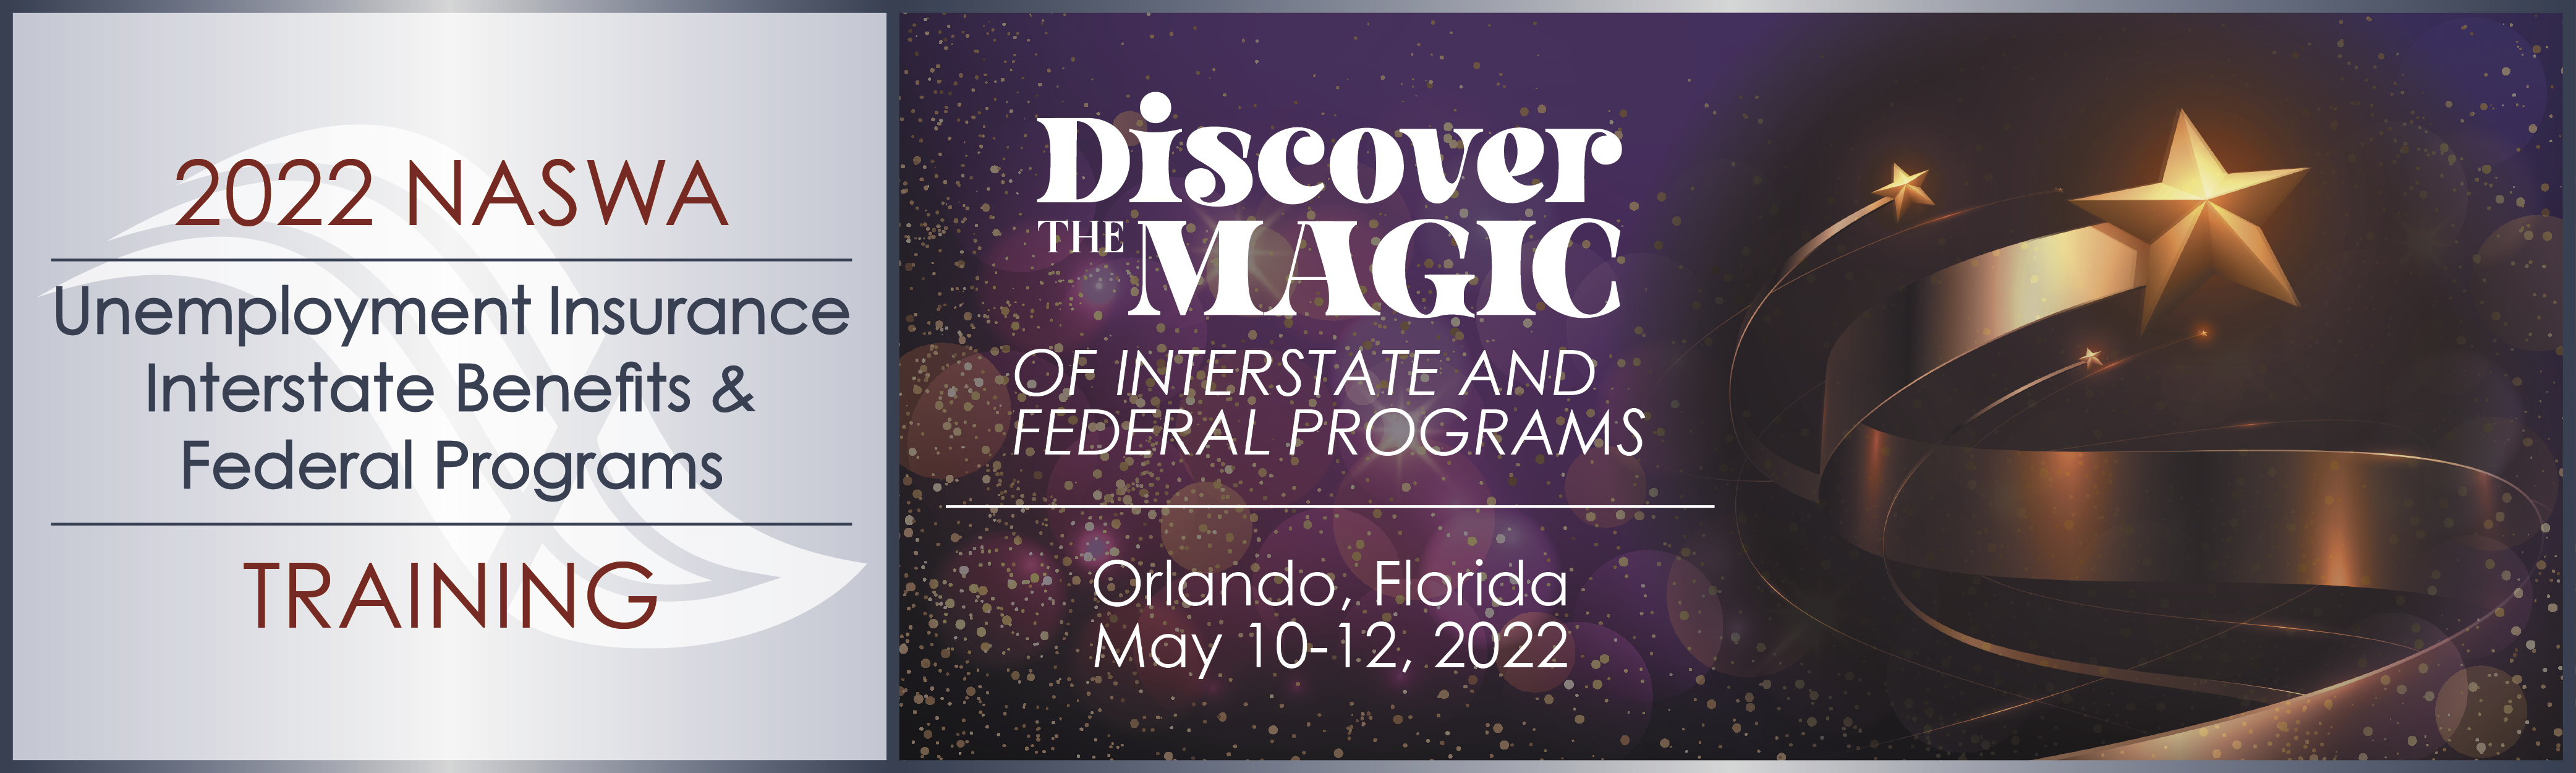 2022 NASWA Unemployment Insurance Interstate Benefits & Federal Programs Training, Orlando, Florida, May 10-12, 2022